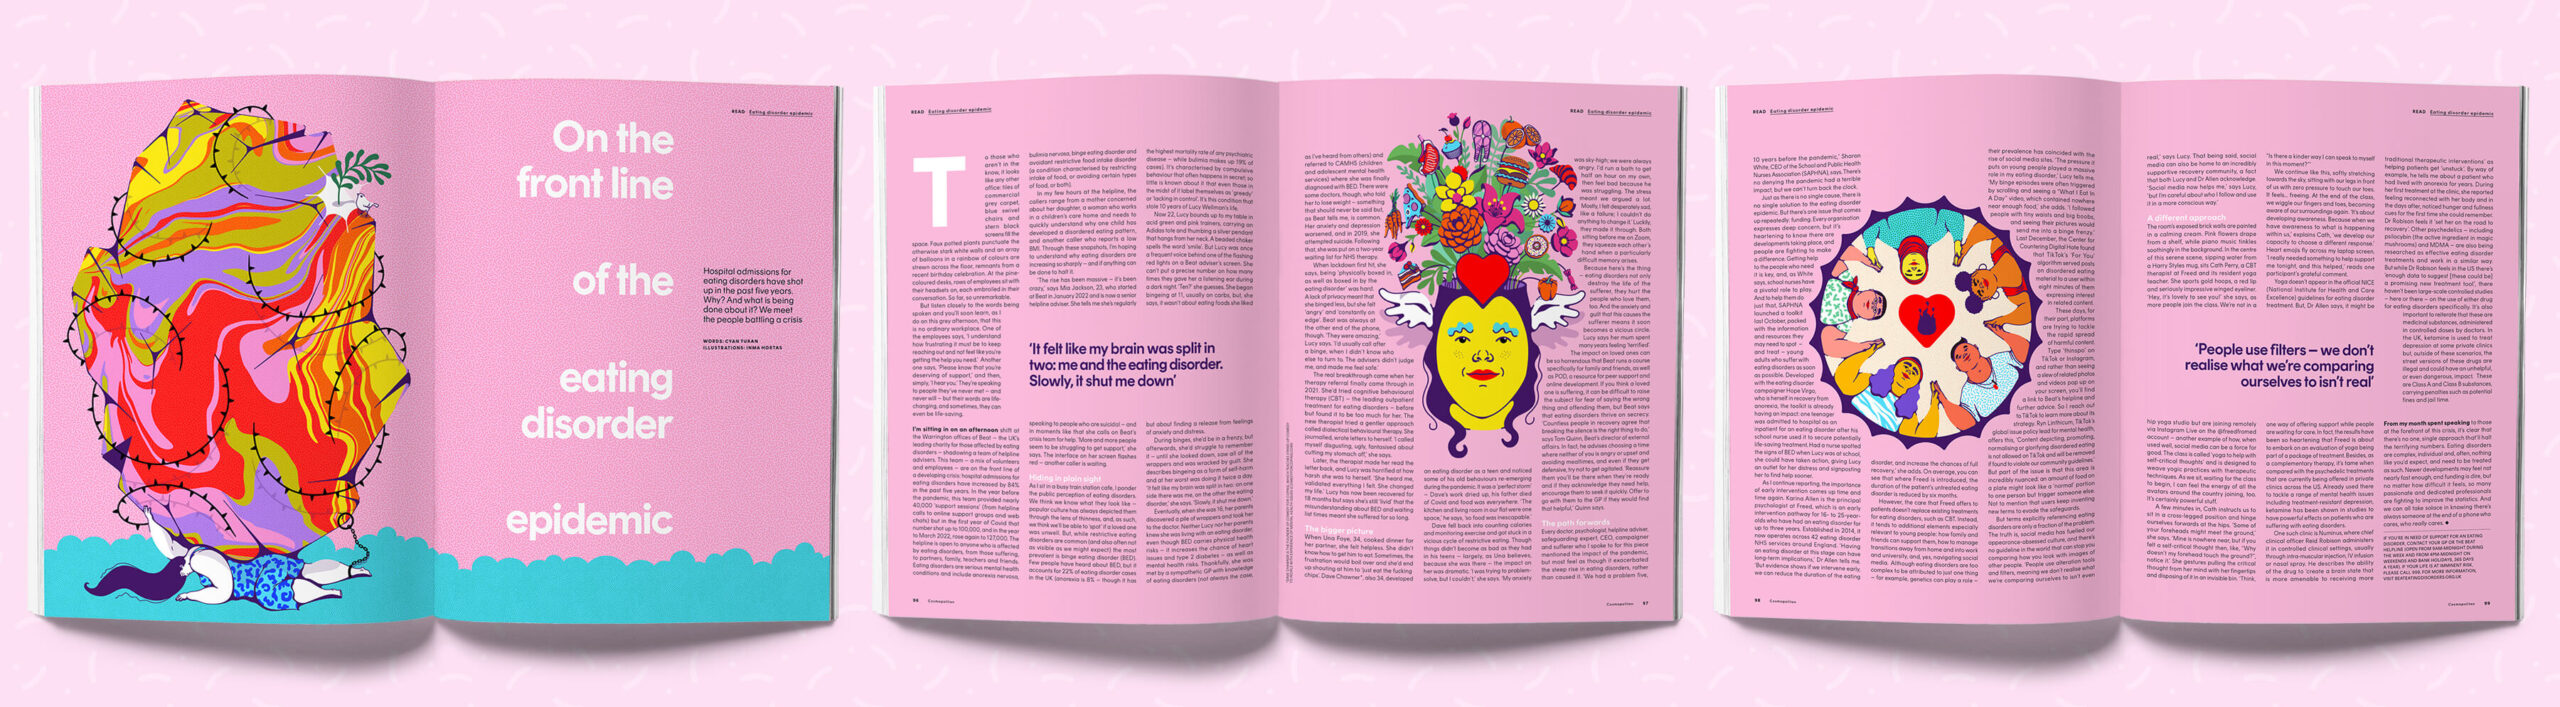 Editorial illustration for Cosmopolitan UK by Inma Hortas @inlohographics mockup